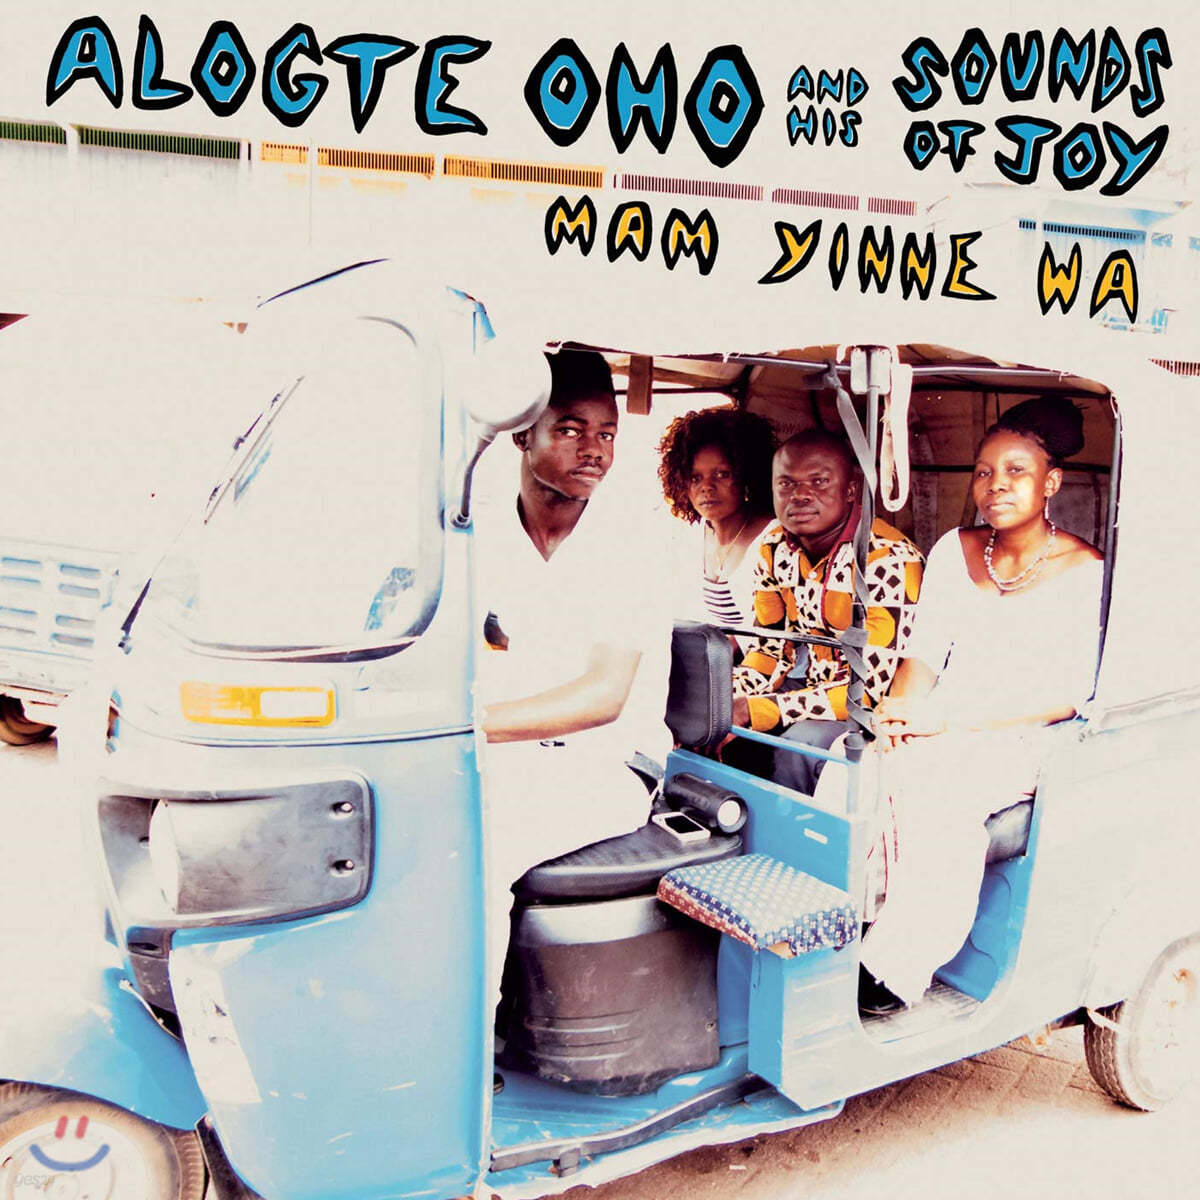 Alogte Oho & His Sounds of Joy (알록테 오 앤 히스 사운즈 오브 조이) - Mam Yinne Wa [LP] 